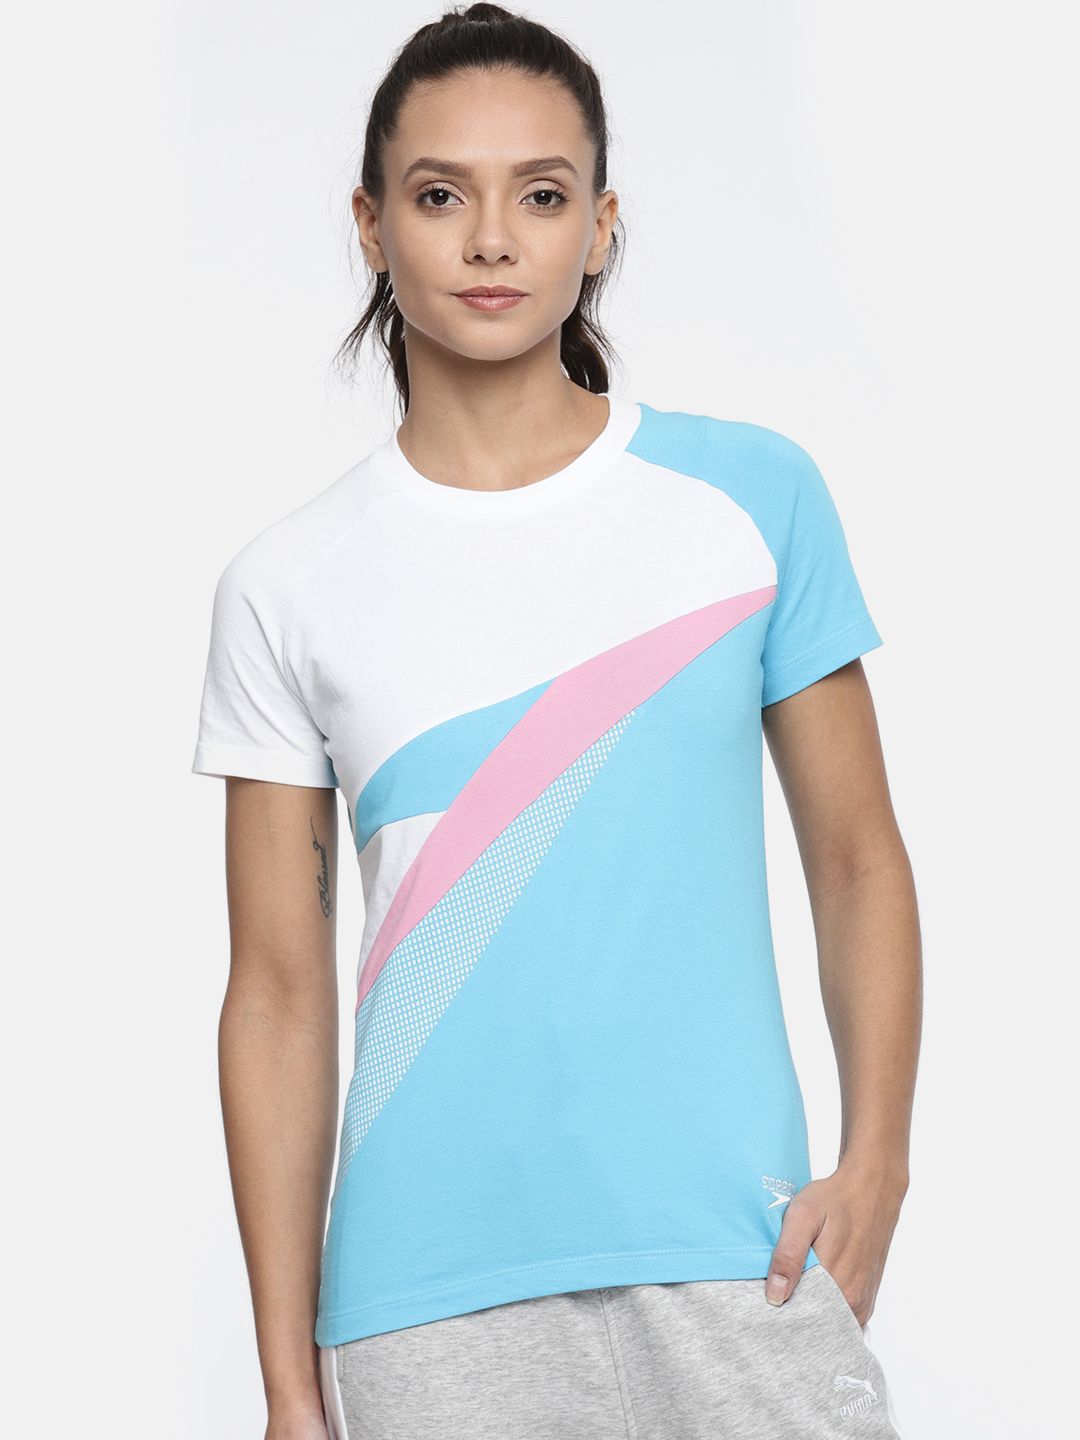 Speedo Women Blue & White Colourblocked Round Neck T-shirt Price in India